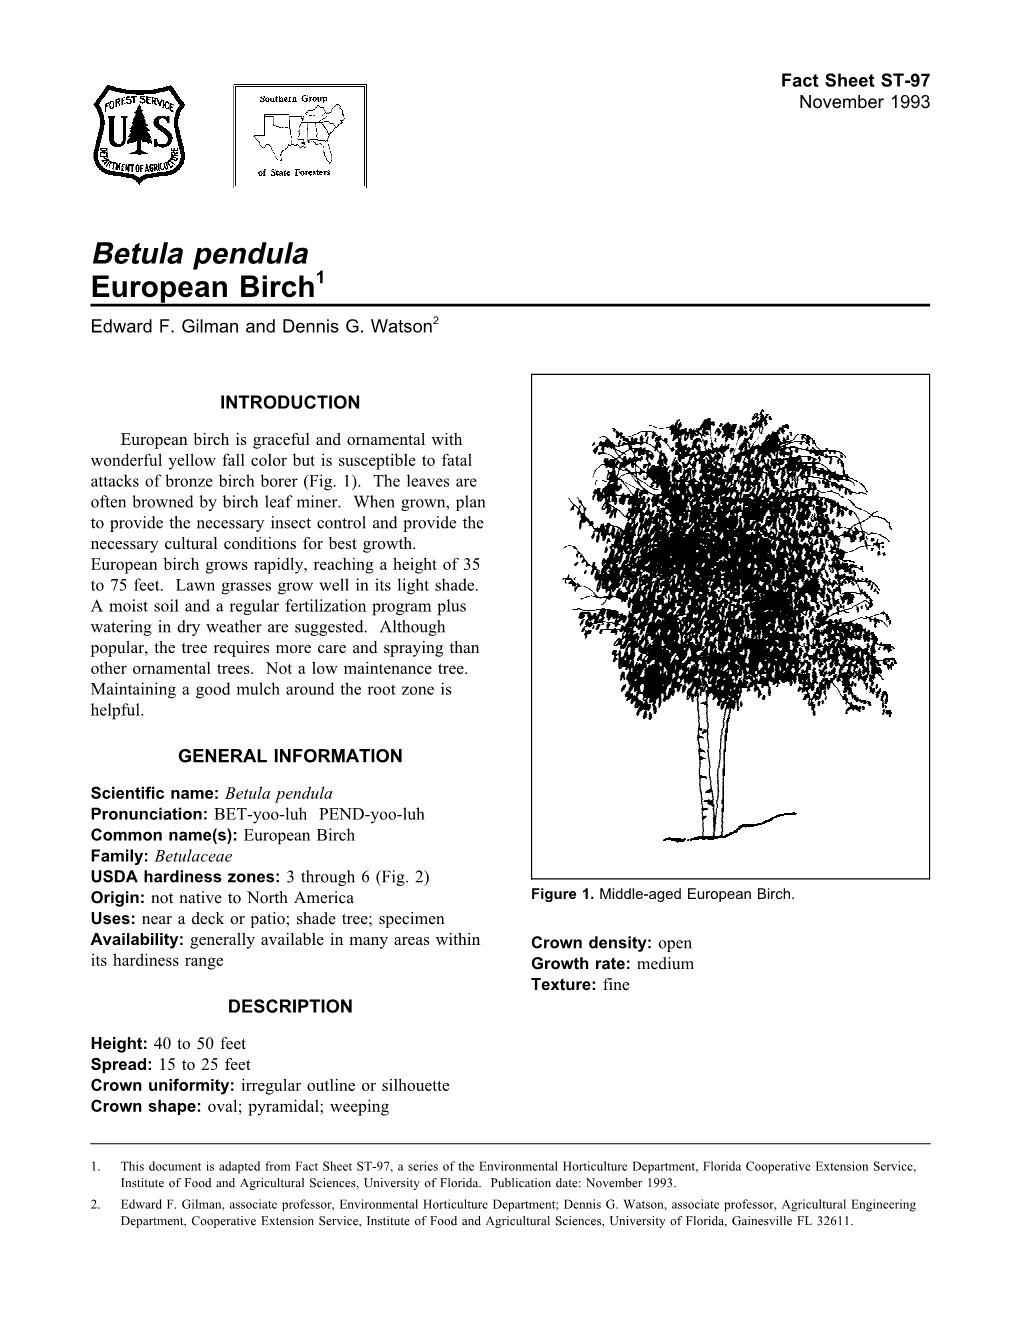 Betula Pendula European Birch1 Edward F